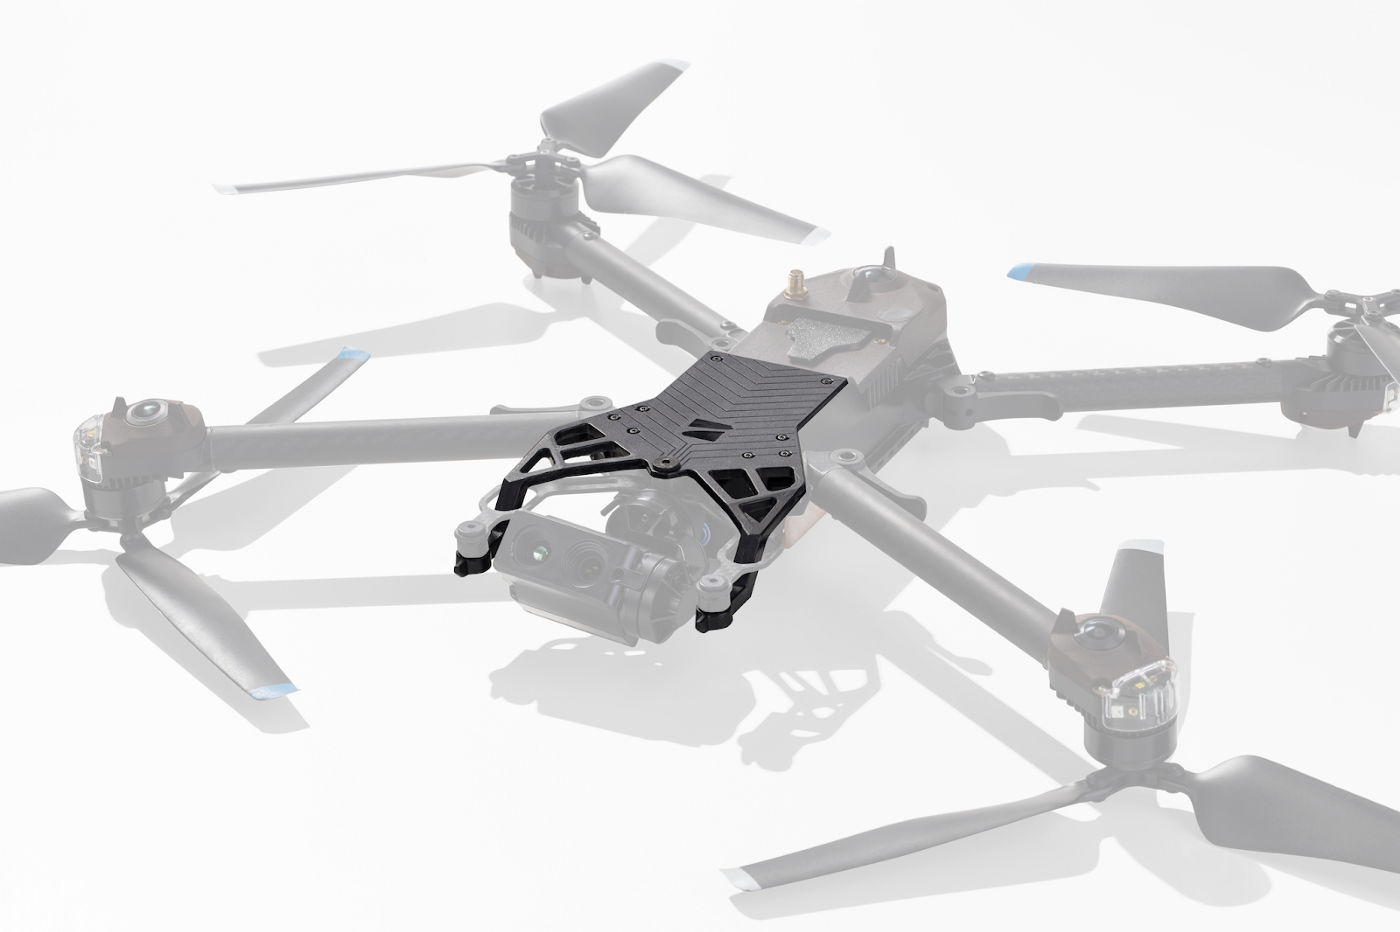 arris skydio drone body frame